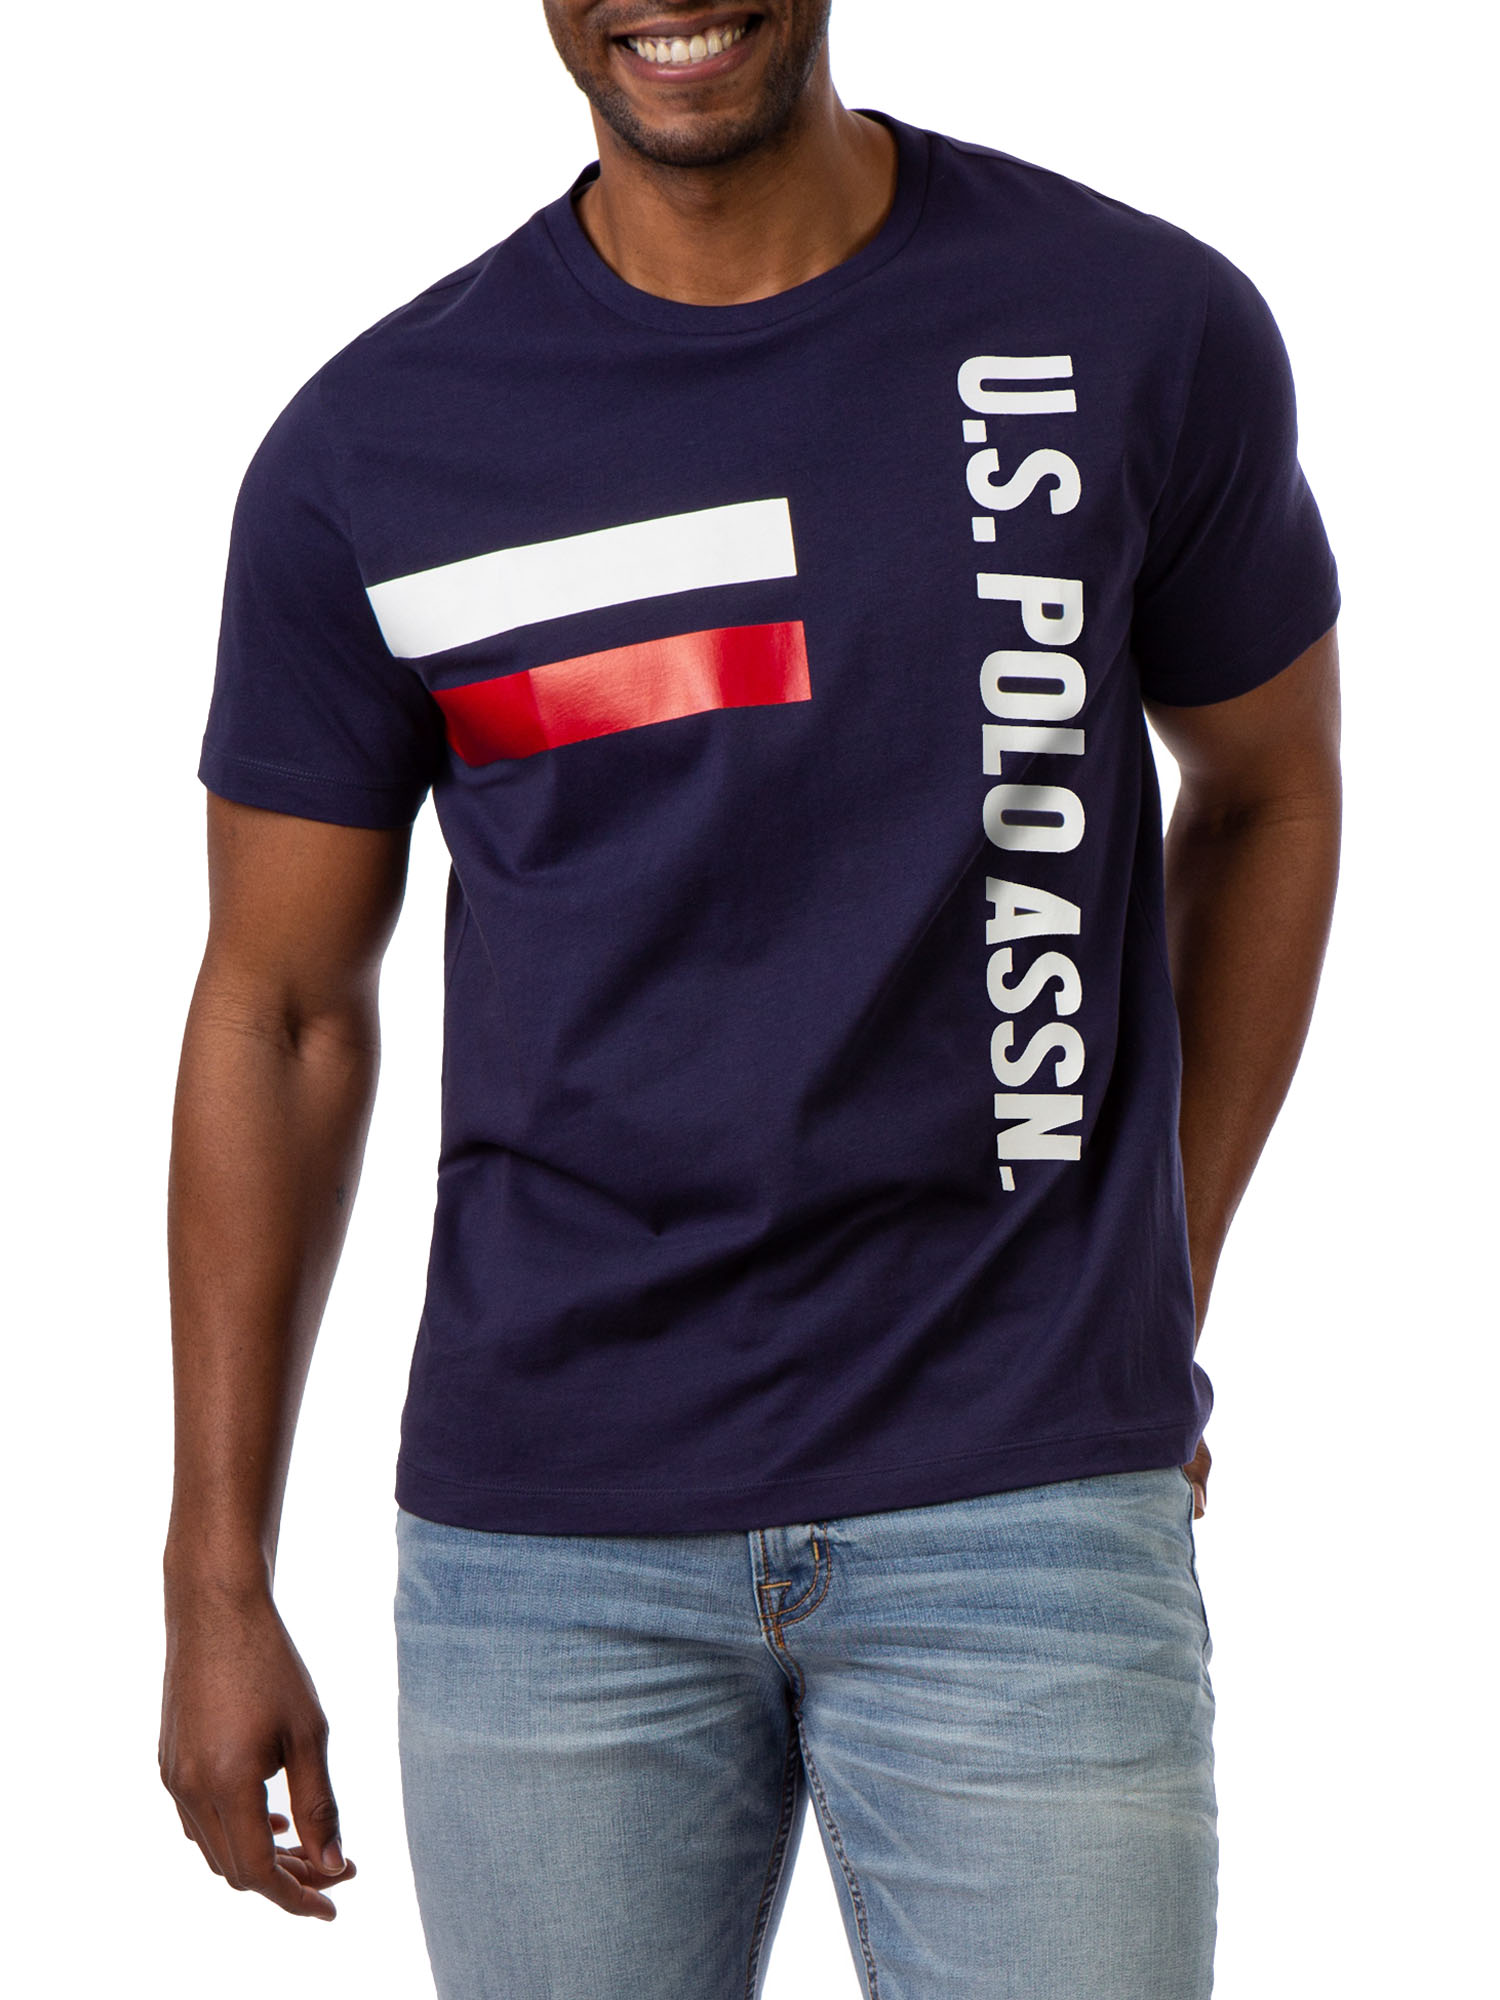 U.S. Polo Assn. Men's Short Sleeve Printed T-Shirt - image 1 of 5